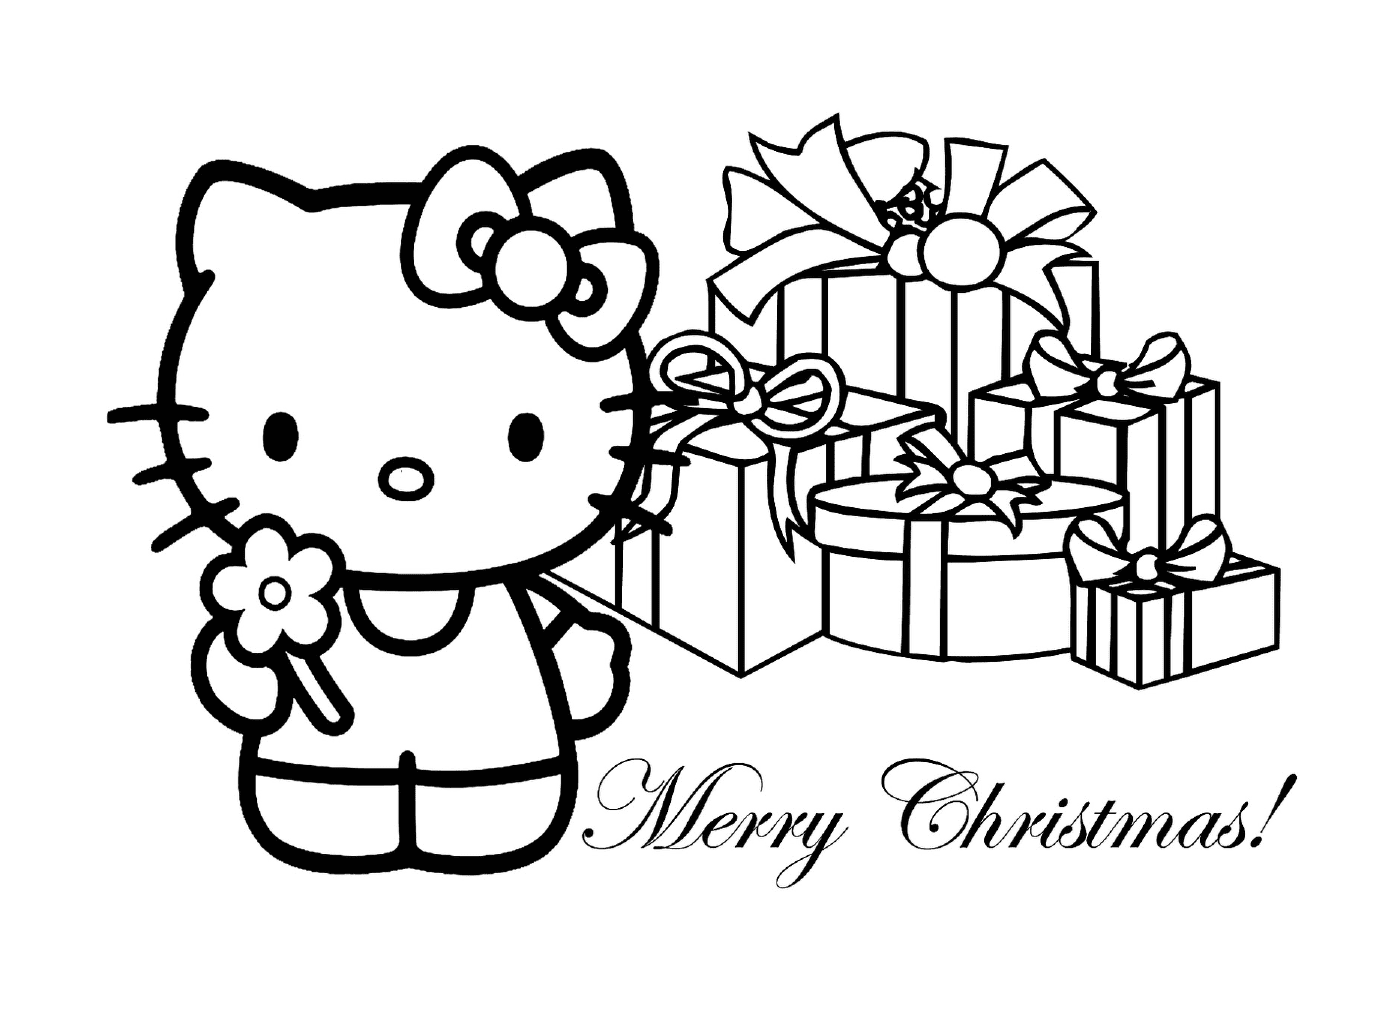  Festa de Natal da Hello Kitty com presentes 